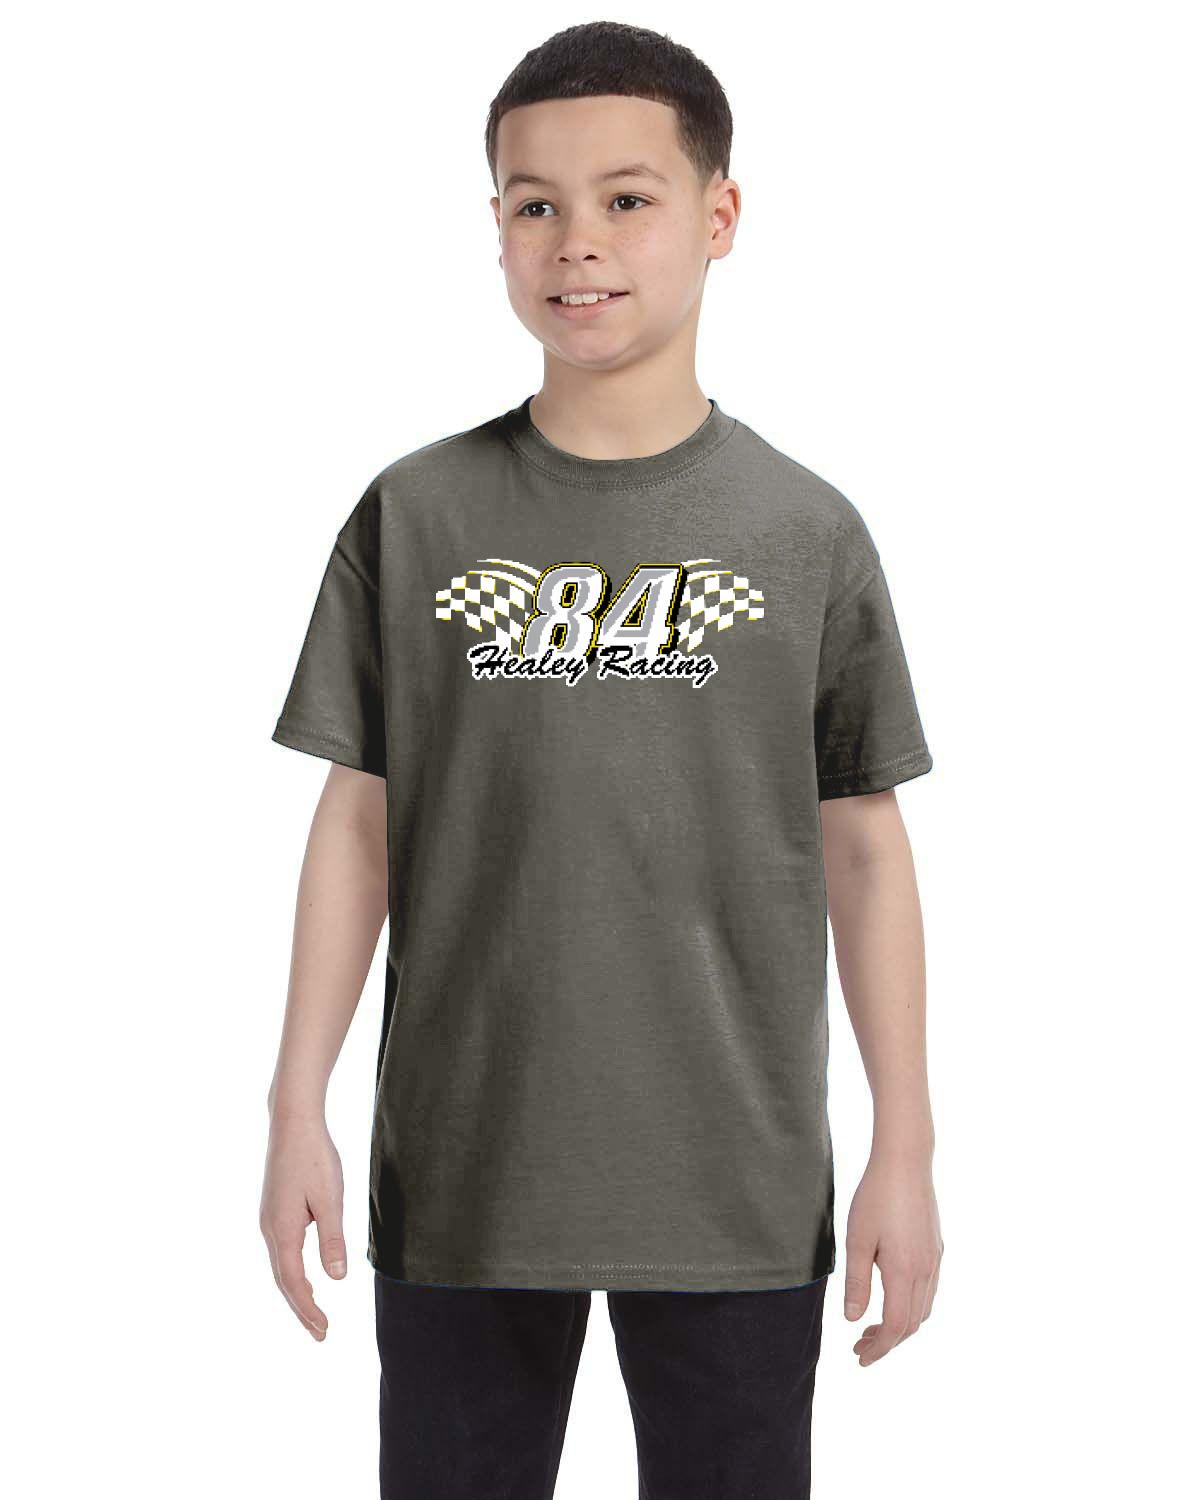 Healy Racing Kid's T-Shirt